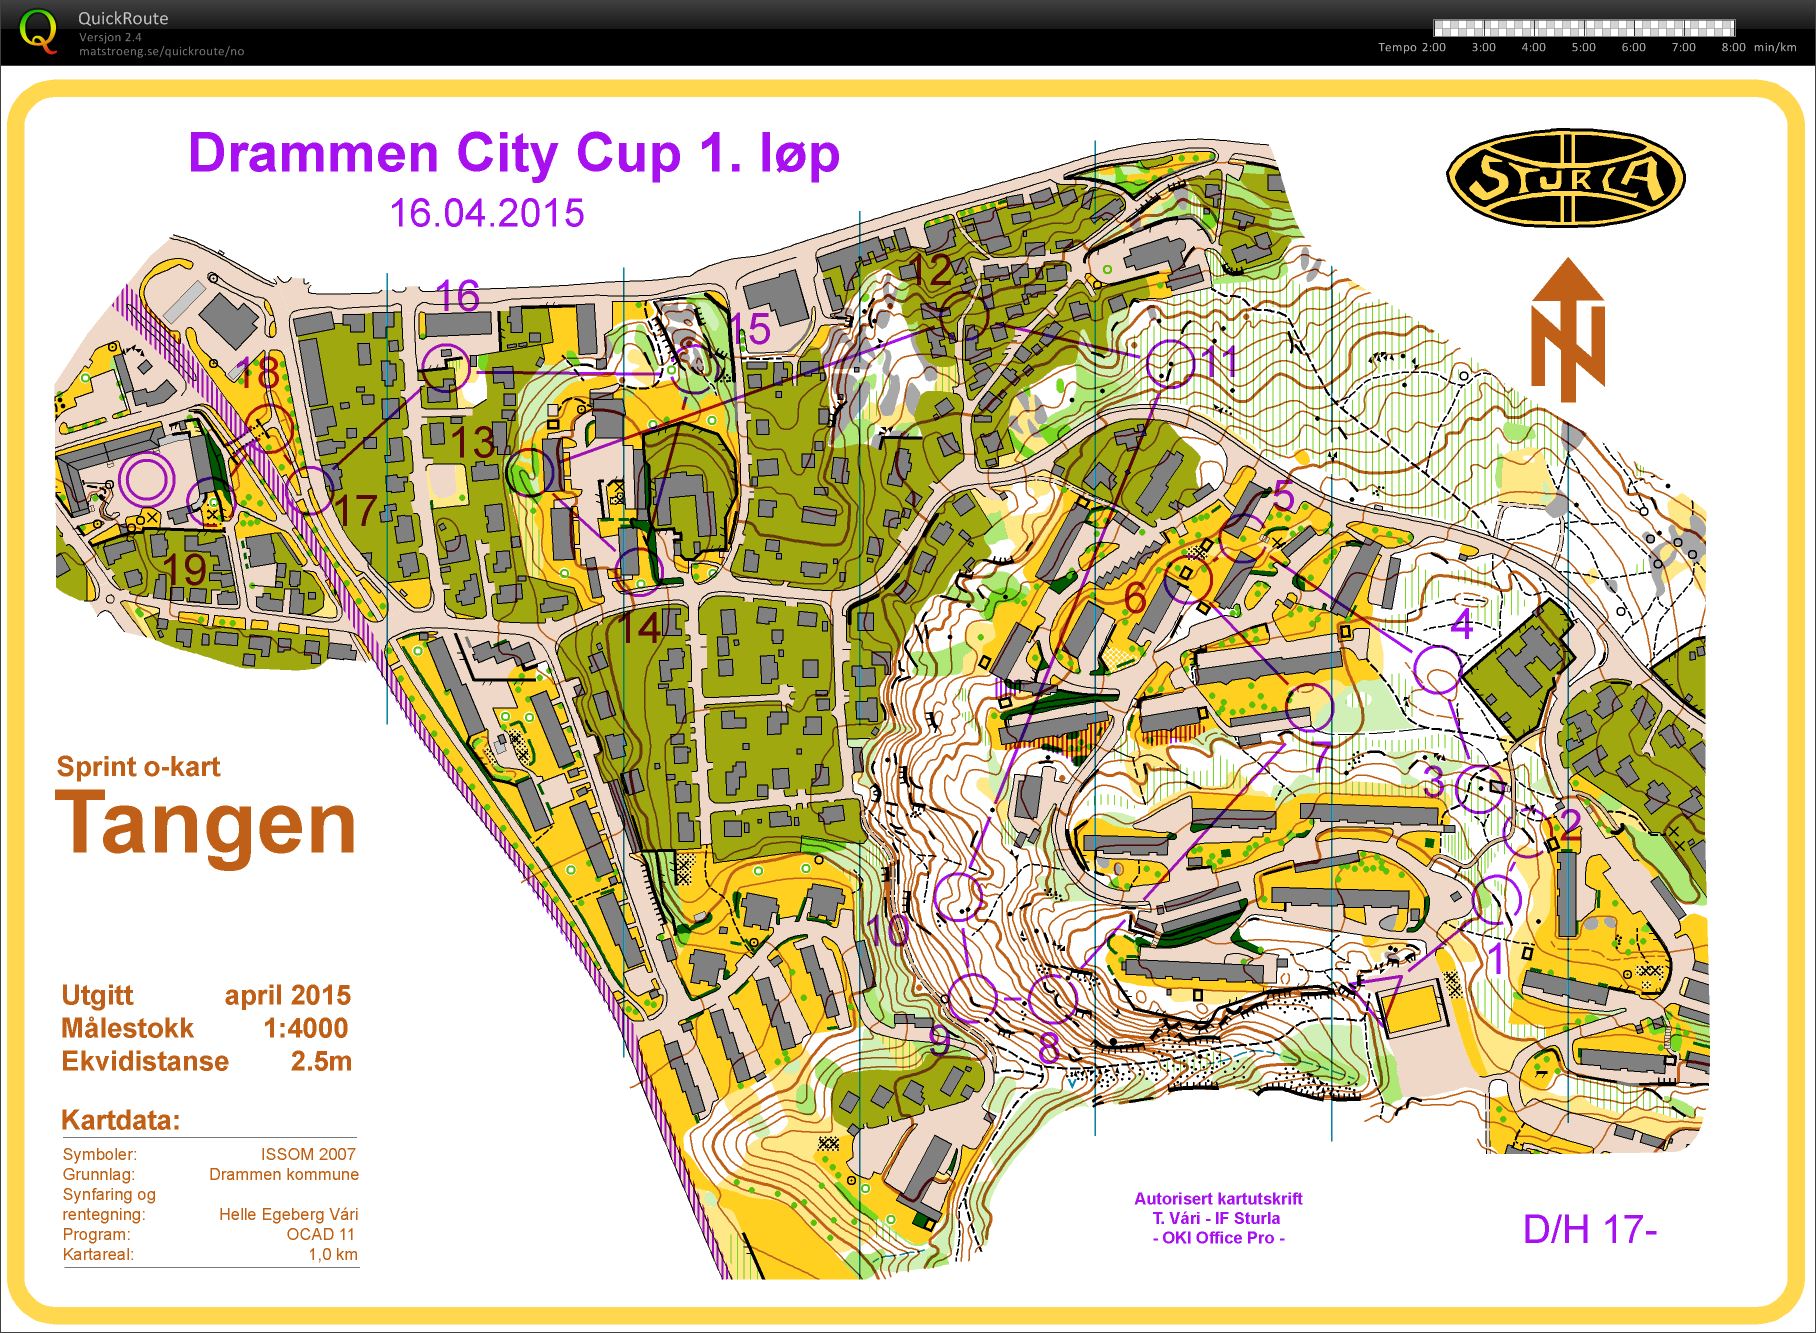 Drammen City Cup 1 (16-04-2015)